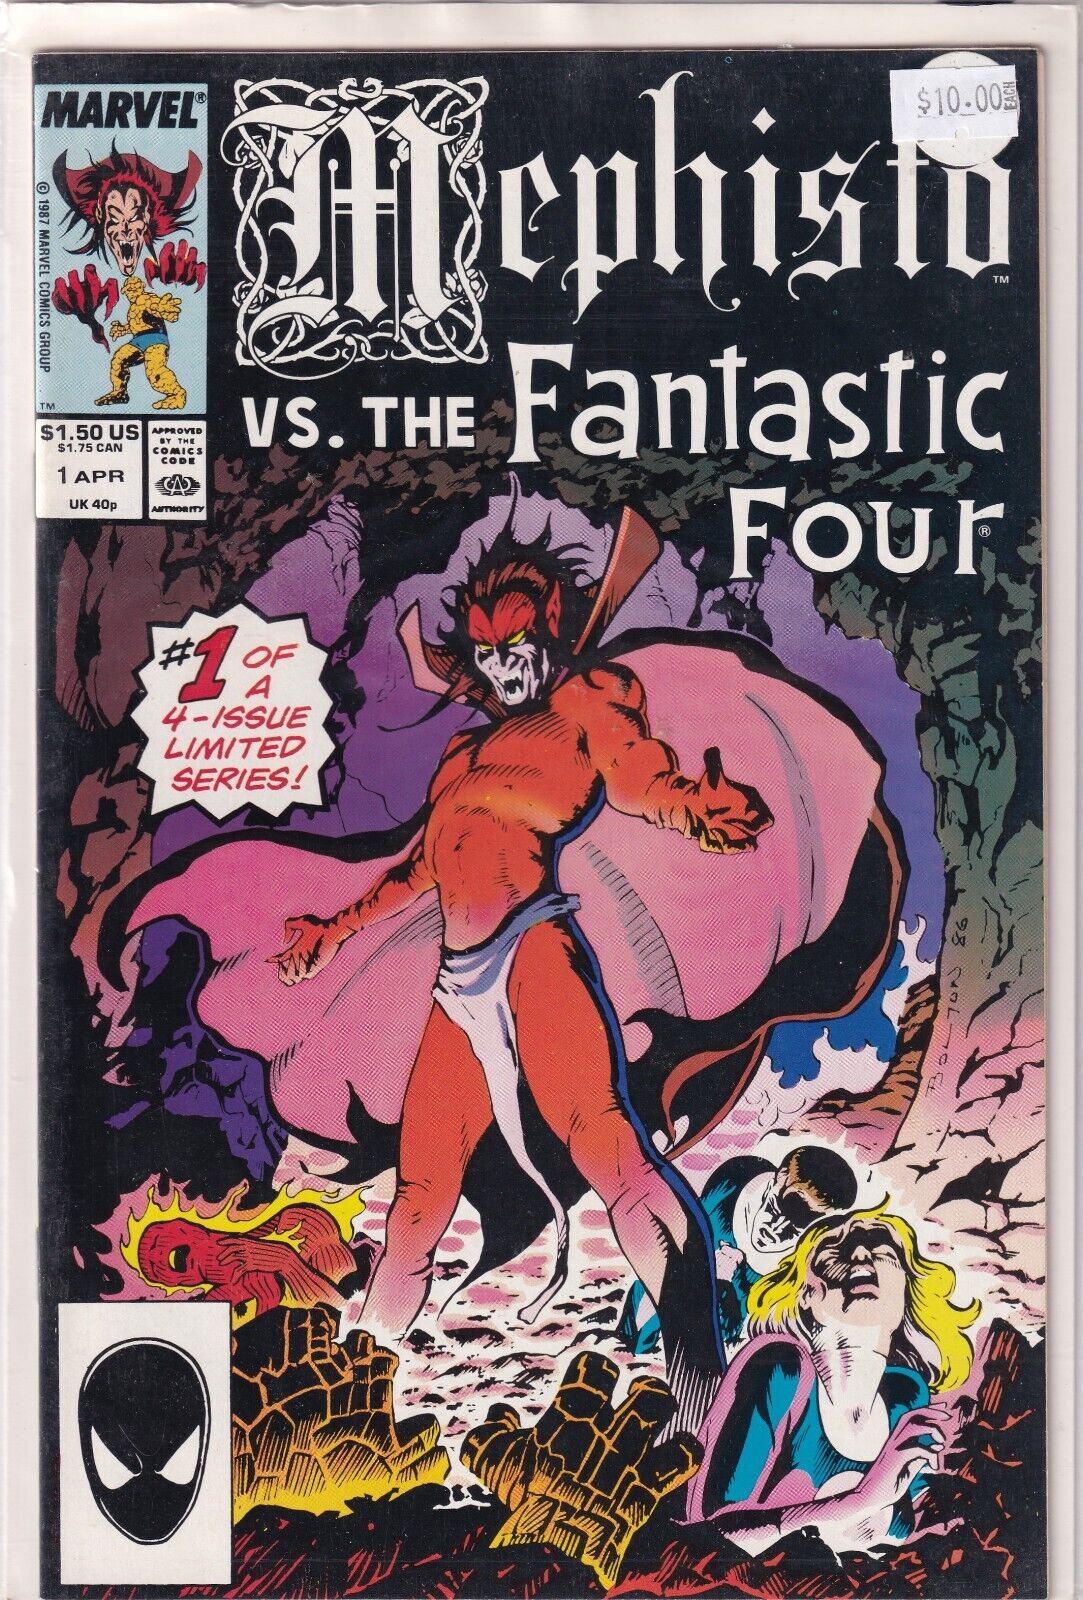 Mephisto vs. The Fantastic Four #1 Marvel Comics (1987)